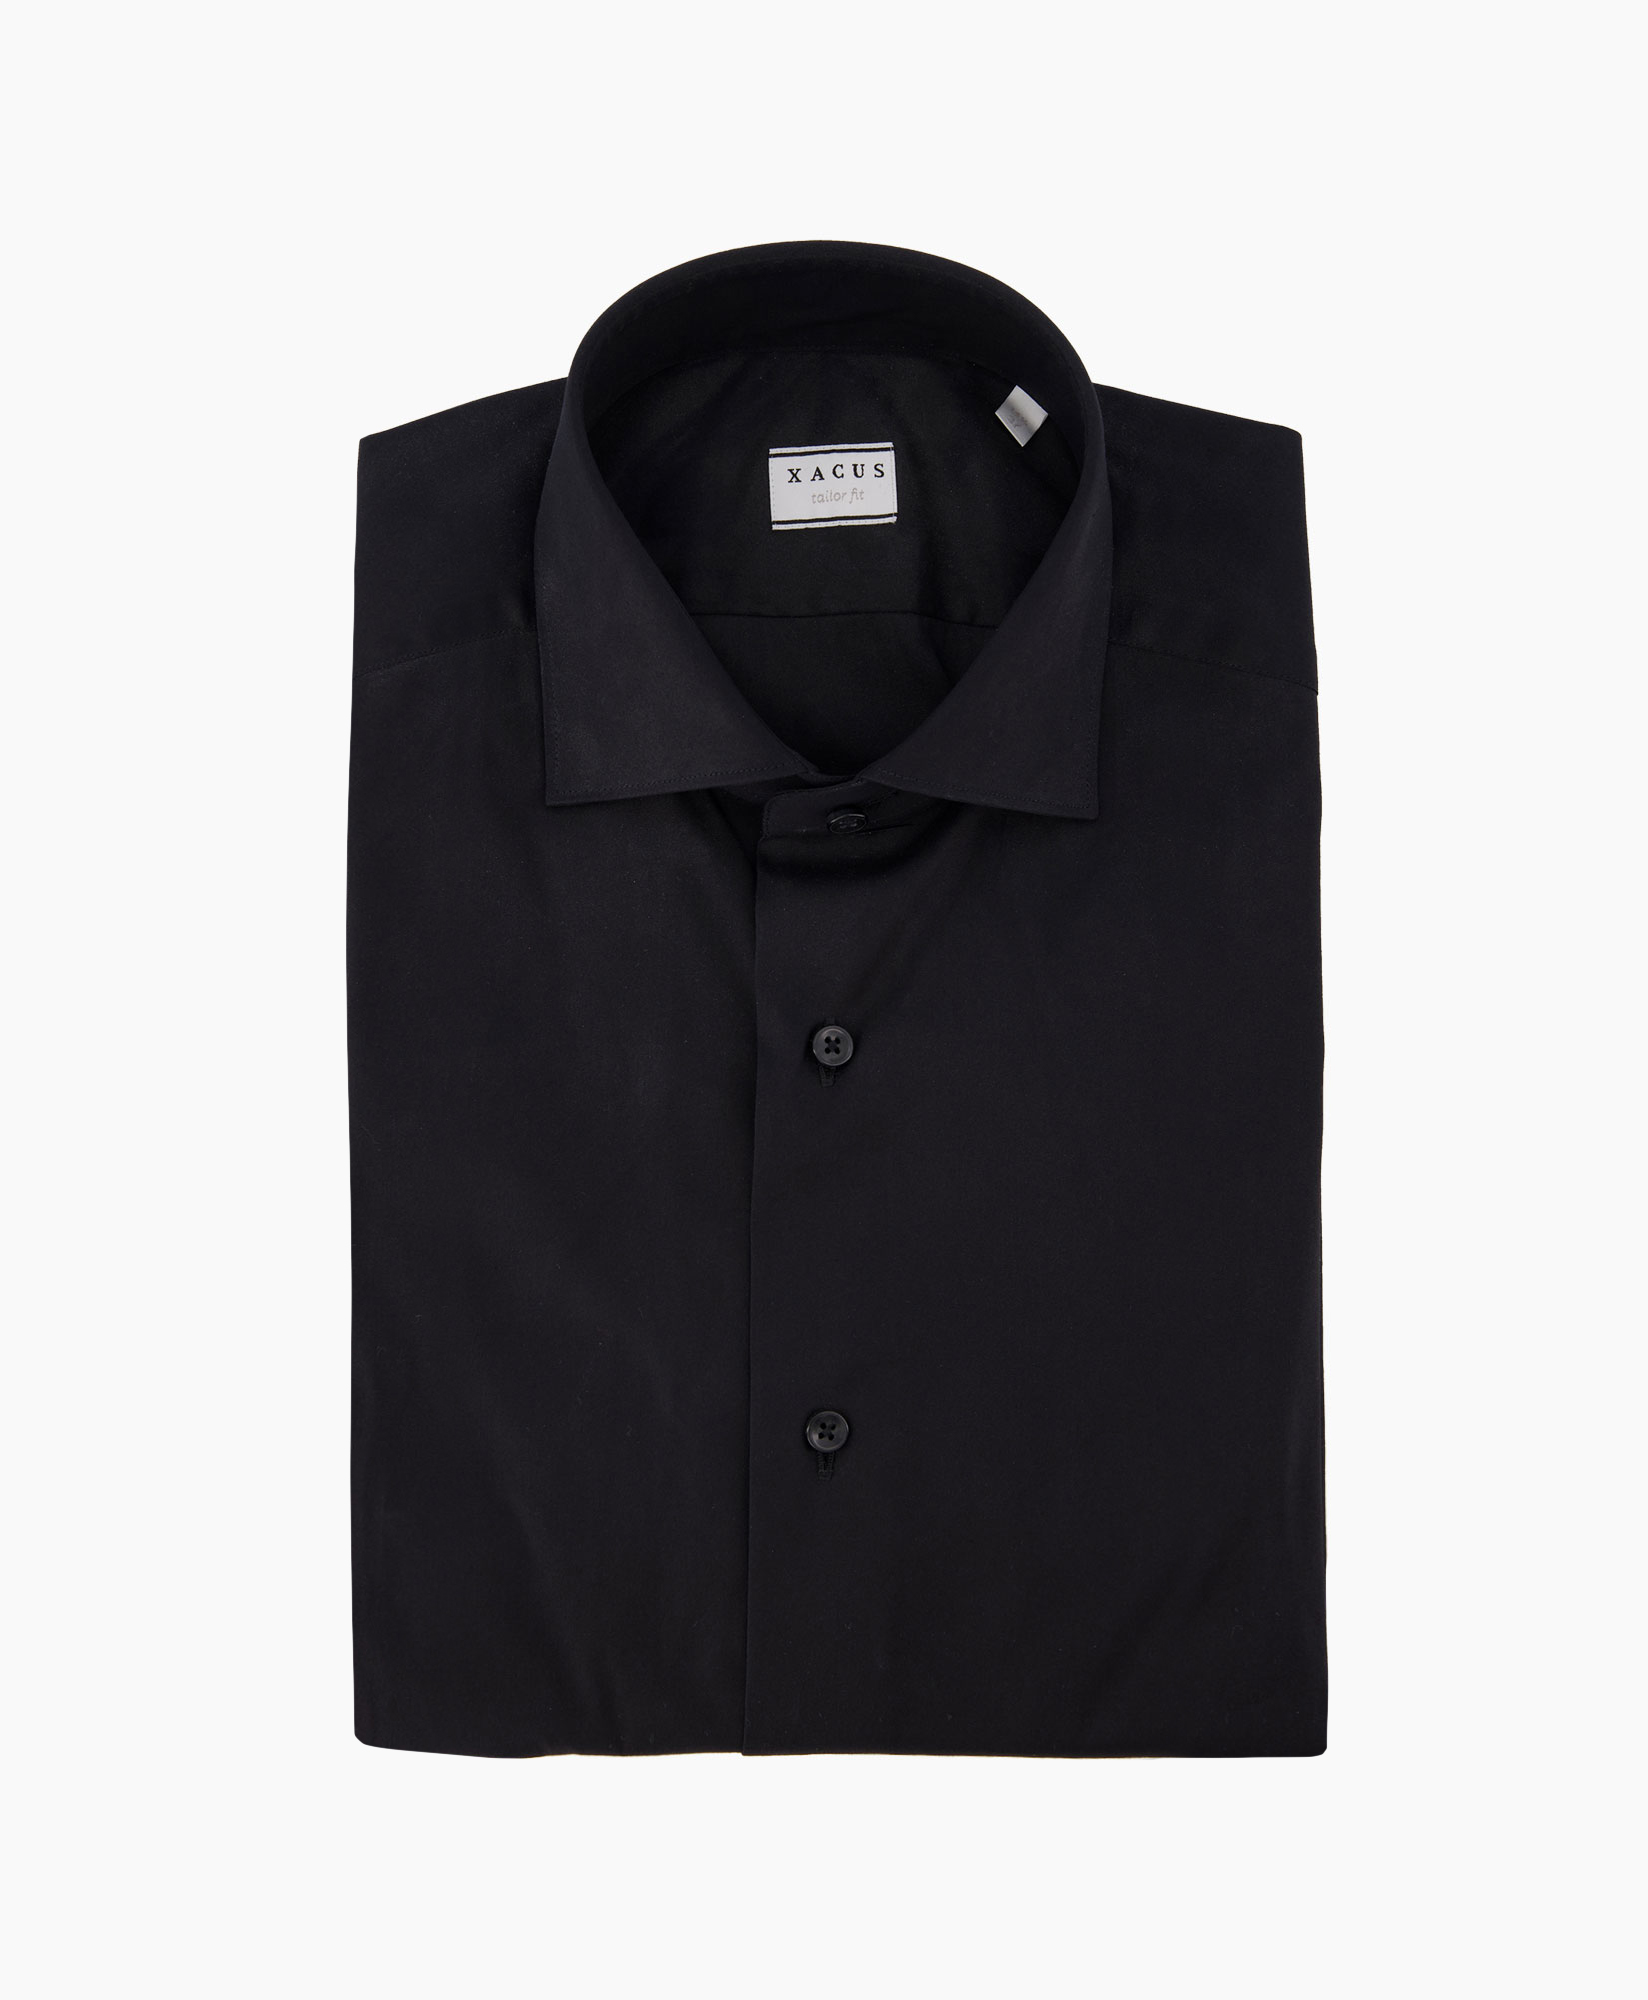 Xacus Overhemd 16125/558 Tailor Zwart